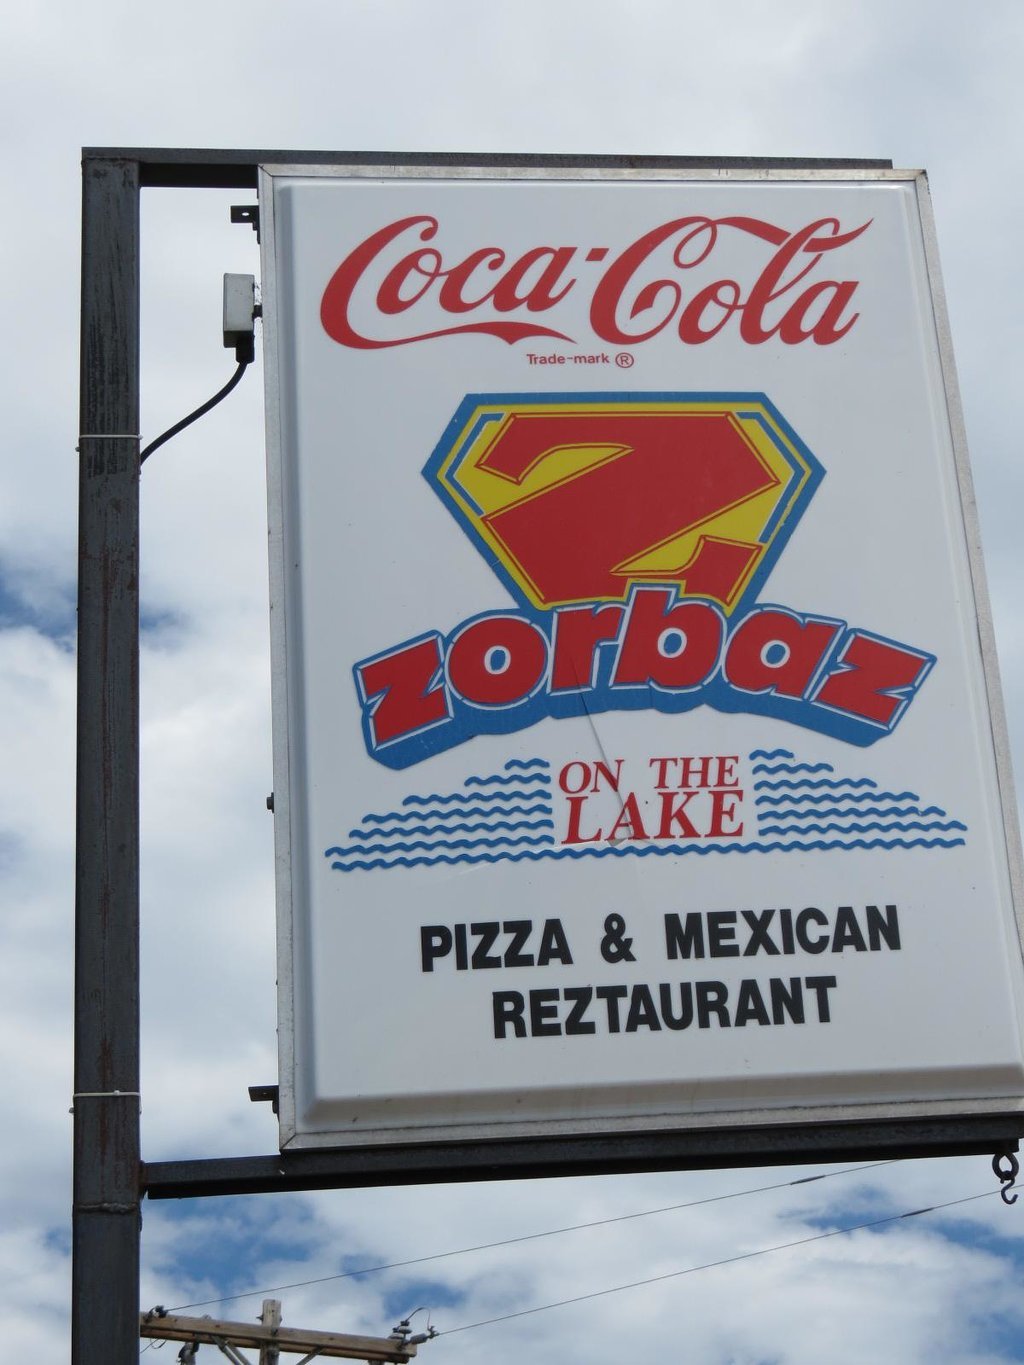 Zorbaz Pizza & Mexican Restaurant - Pelican Lake